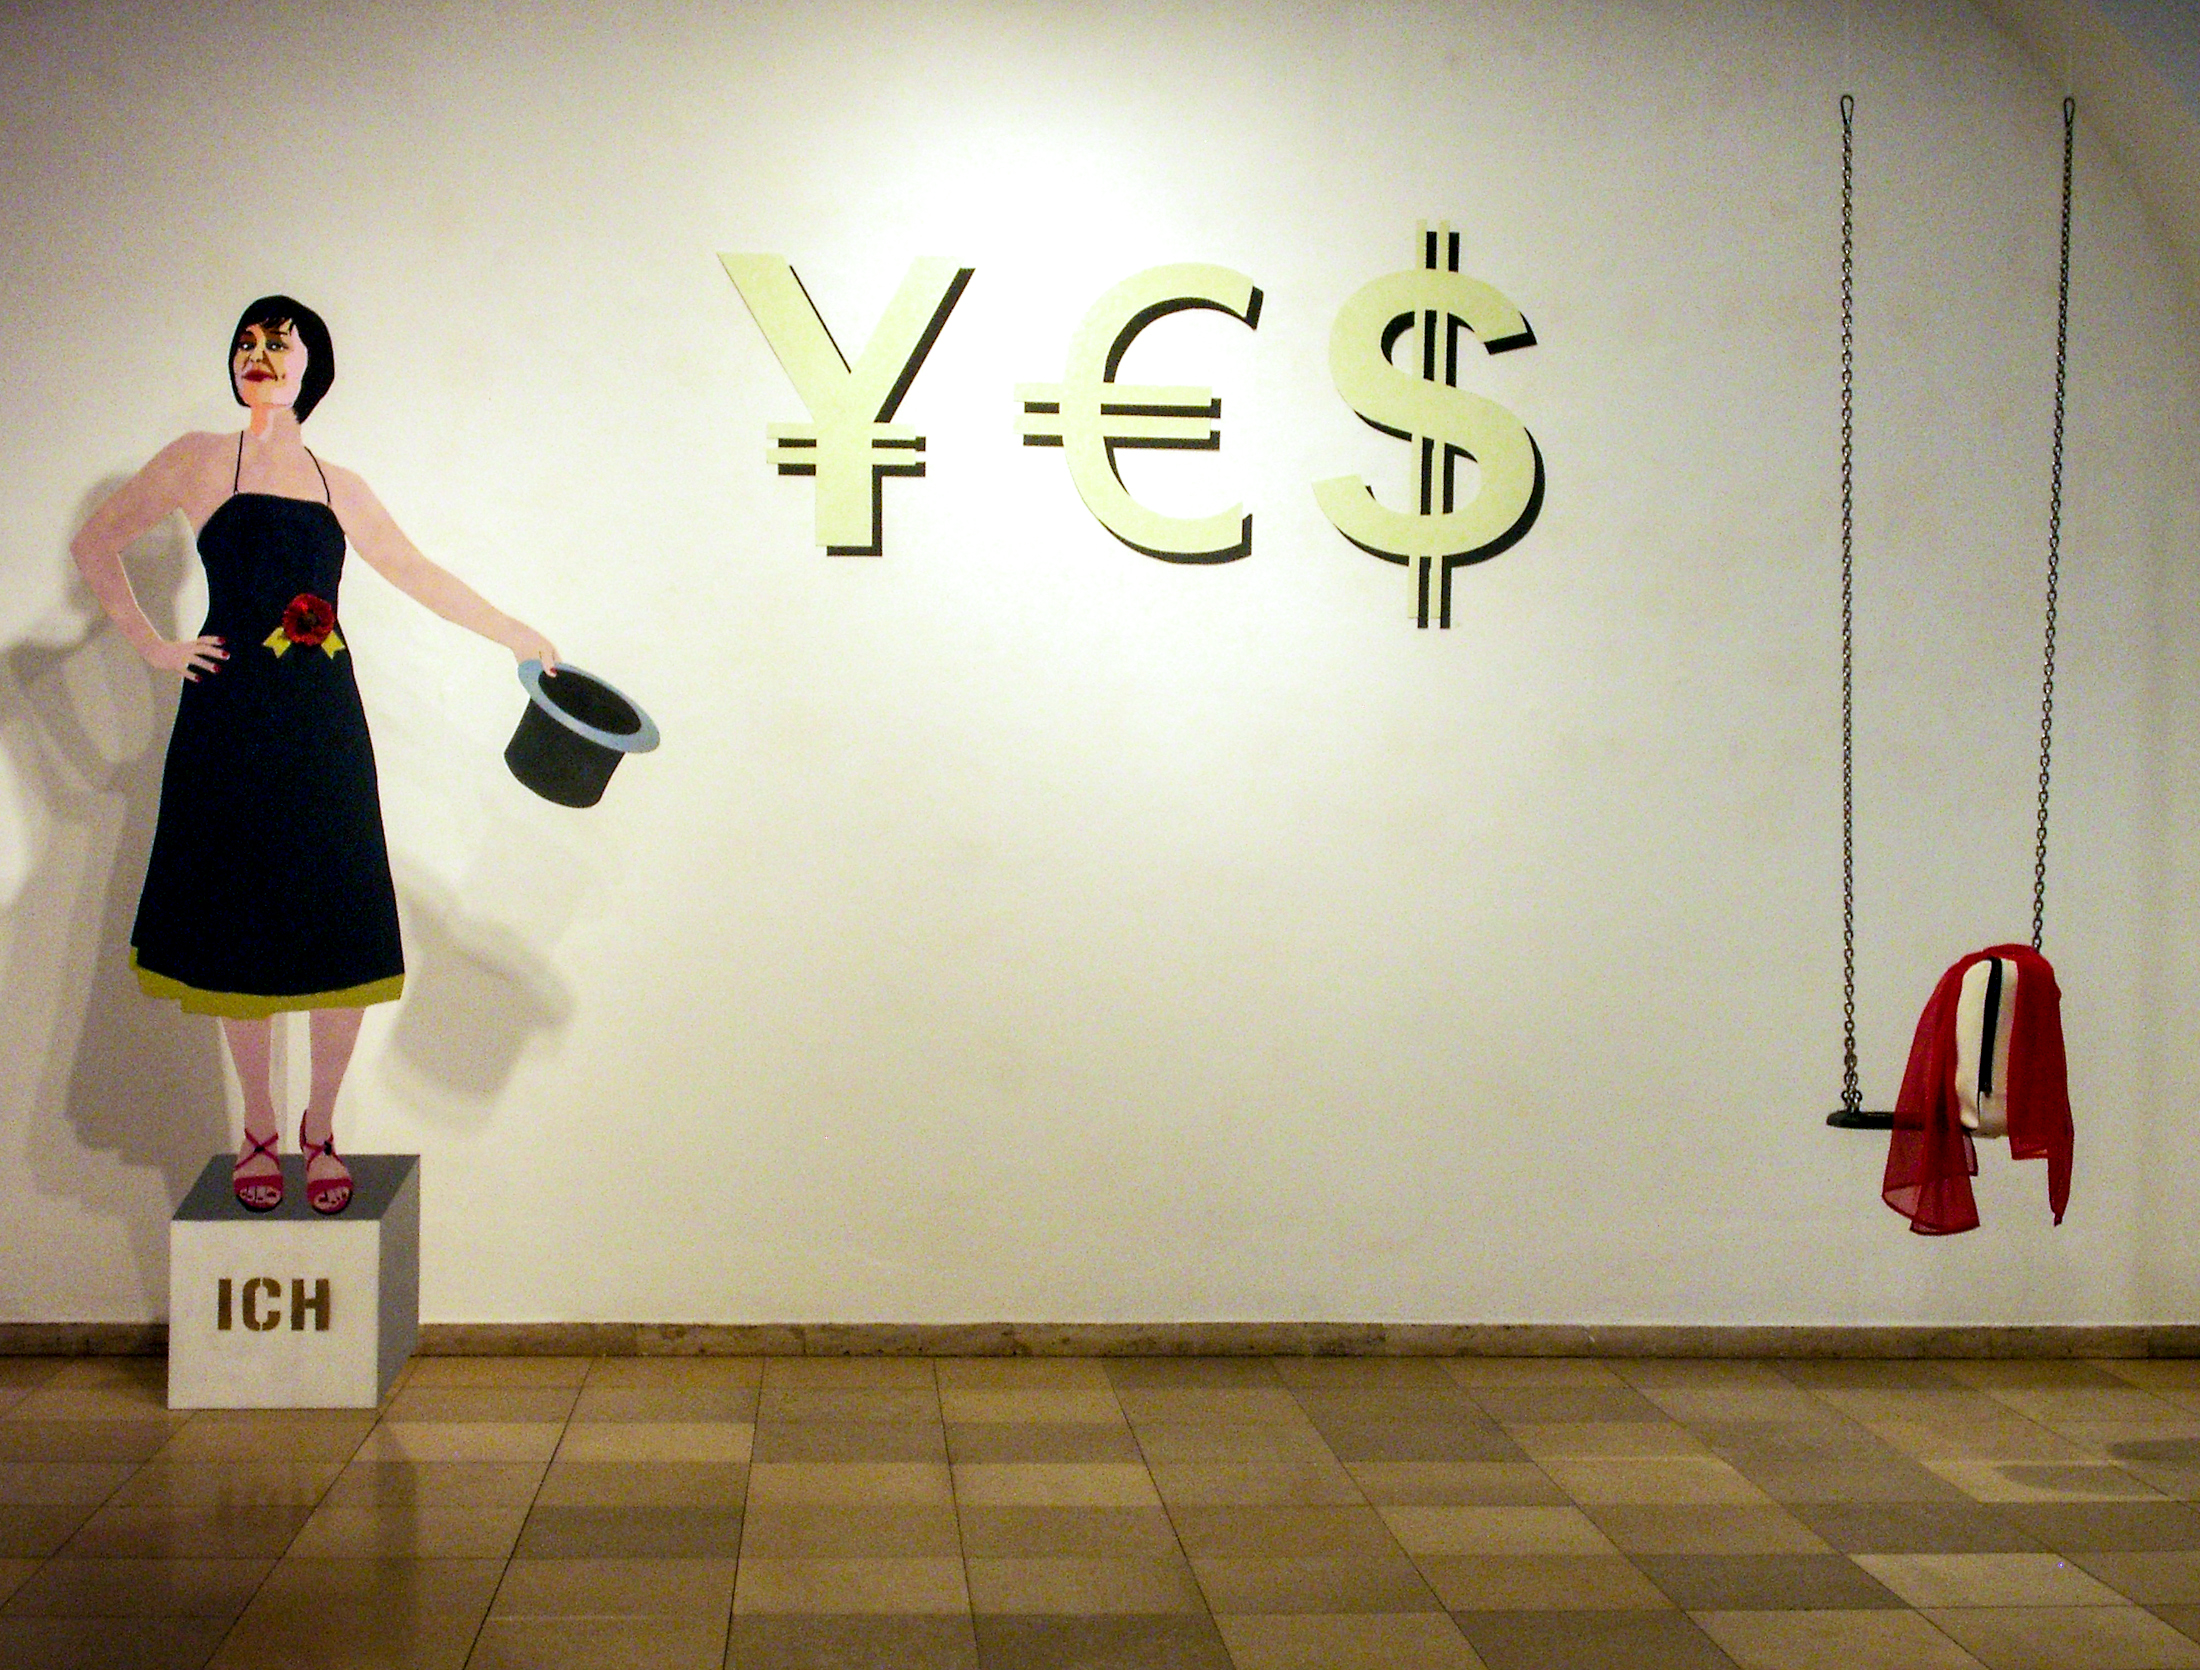 Installation YES, Helga Schager, 2009